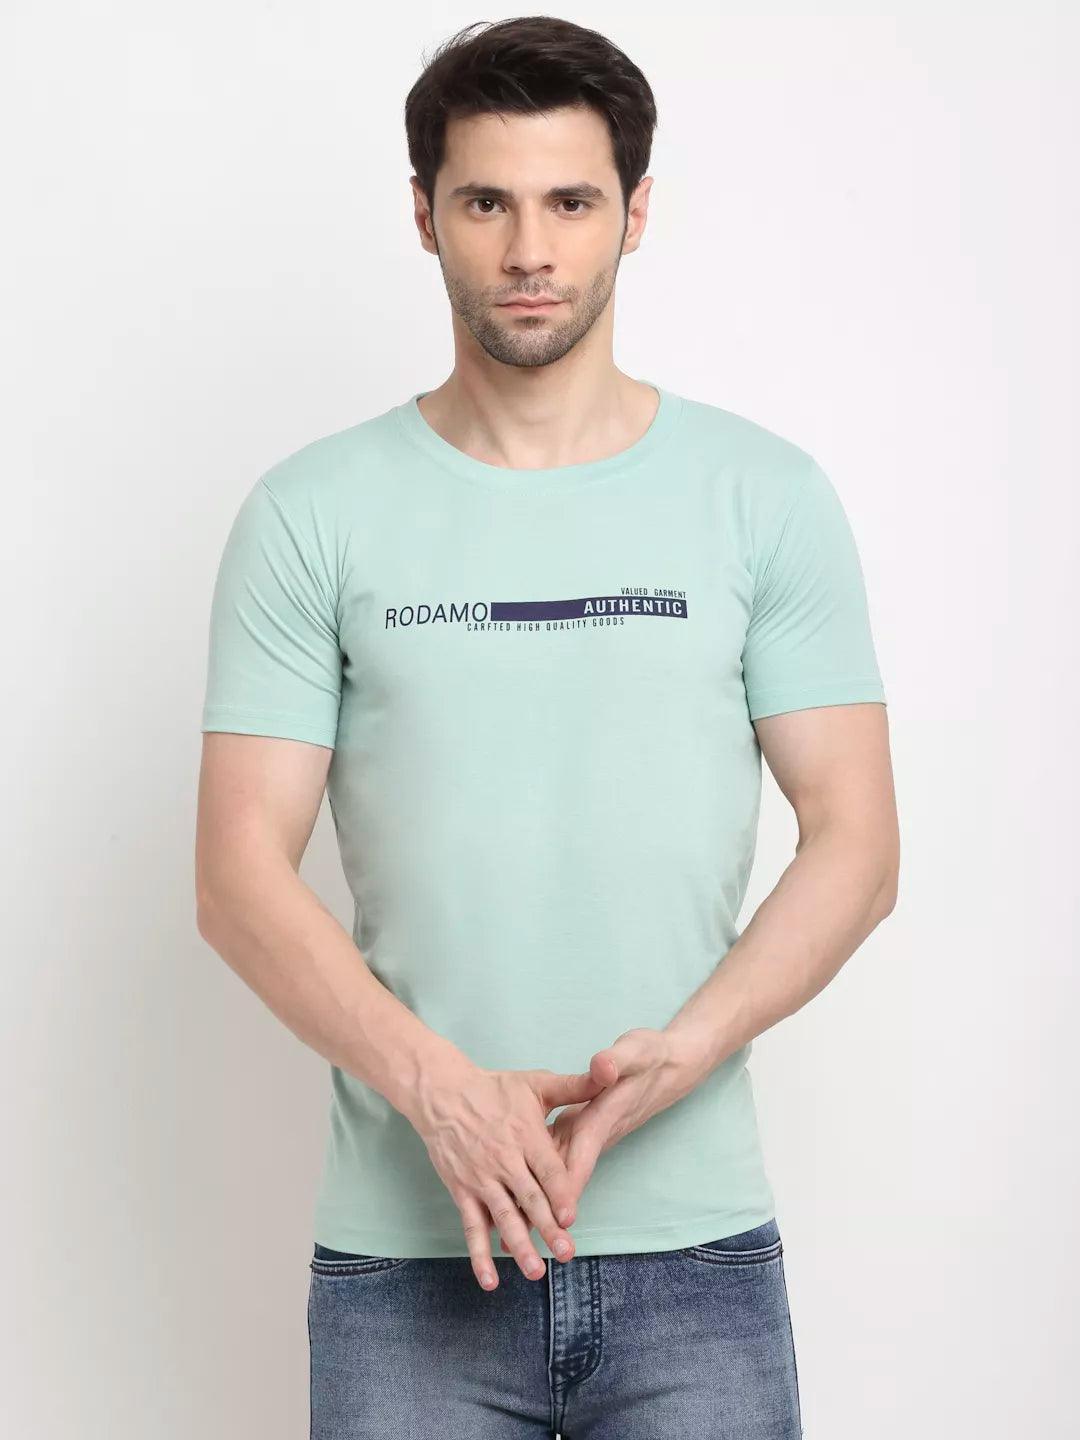 Rodamo Cotton Printed Green T-Shirt (Medium) - ShopIMO